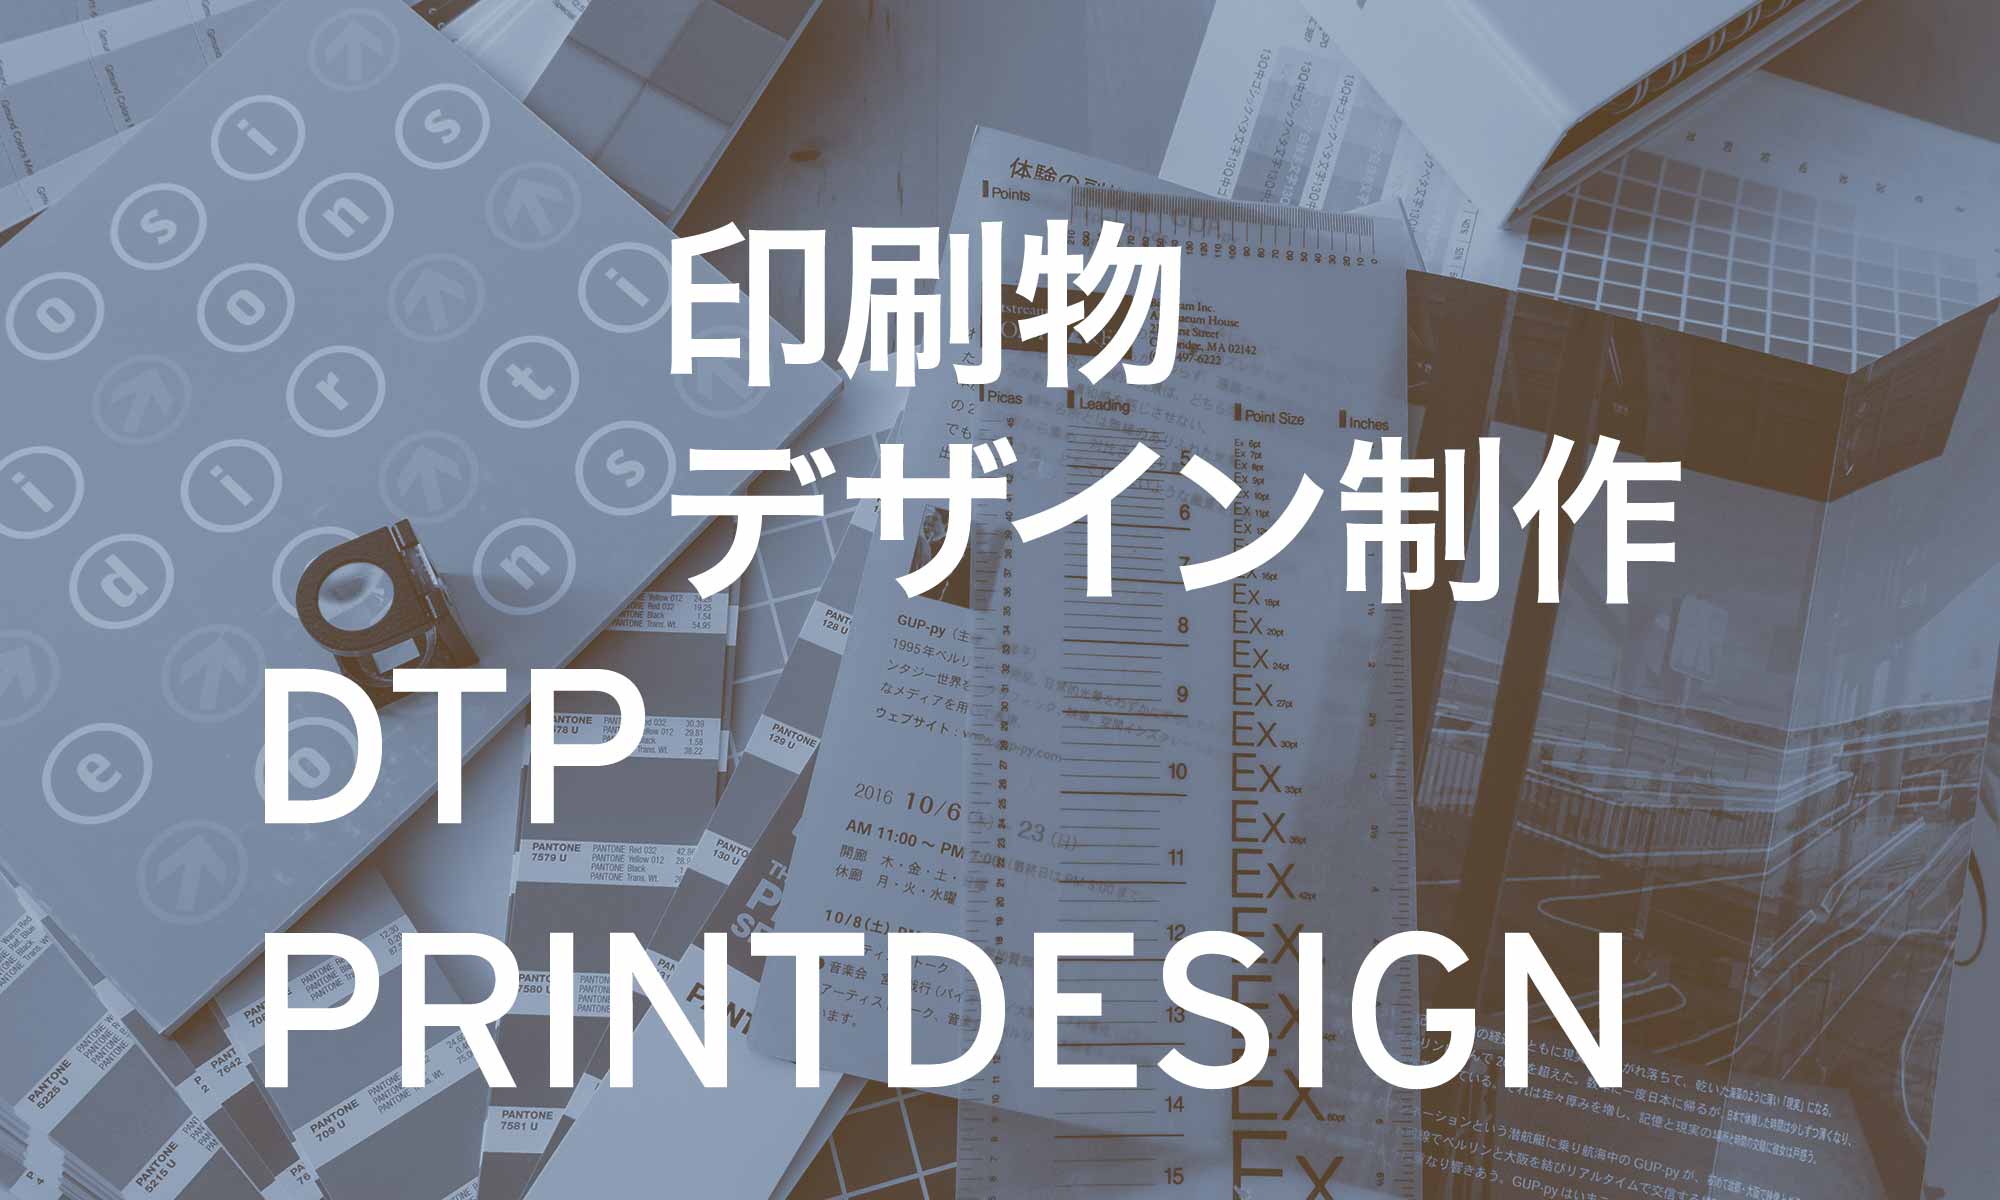 Dtp レイアウト 日本語 ドイツ語の印刷物デザイン制作 De Jp